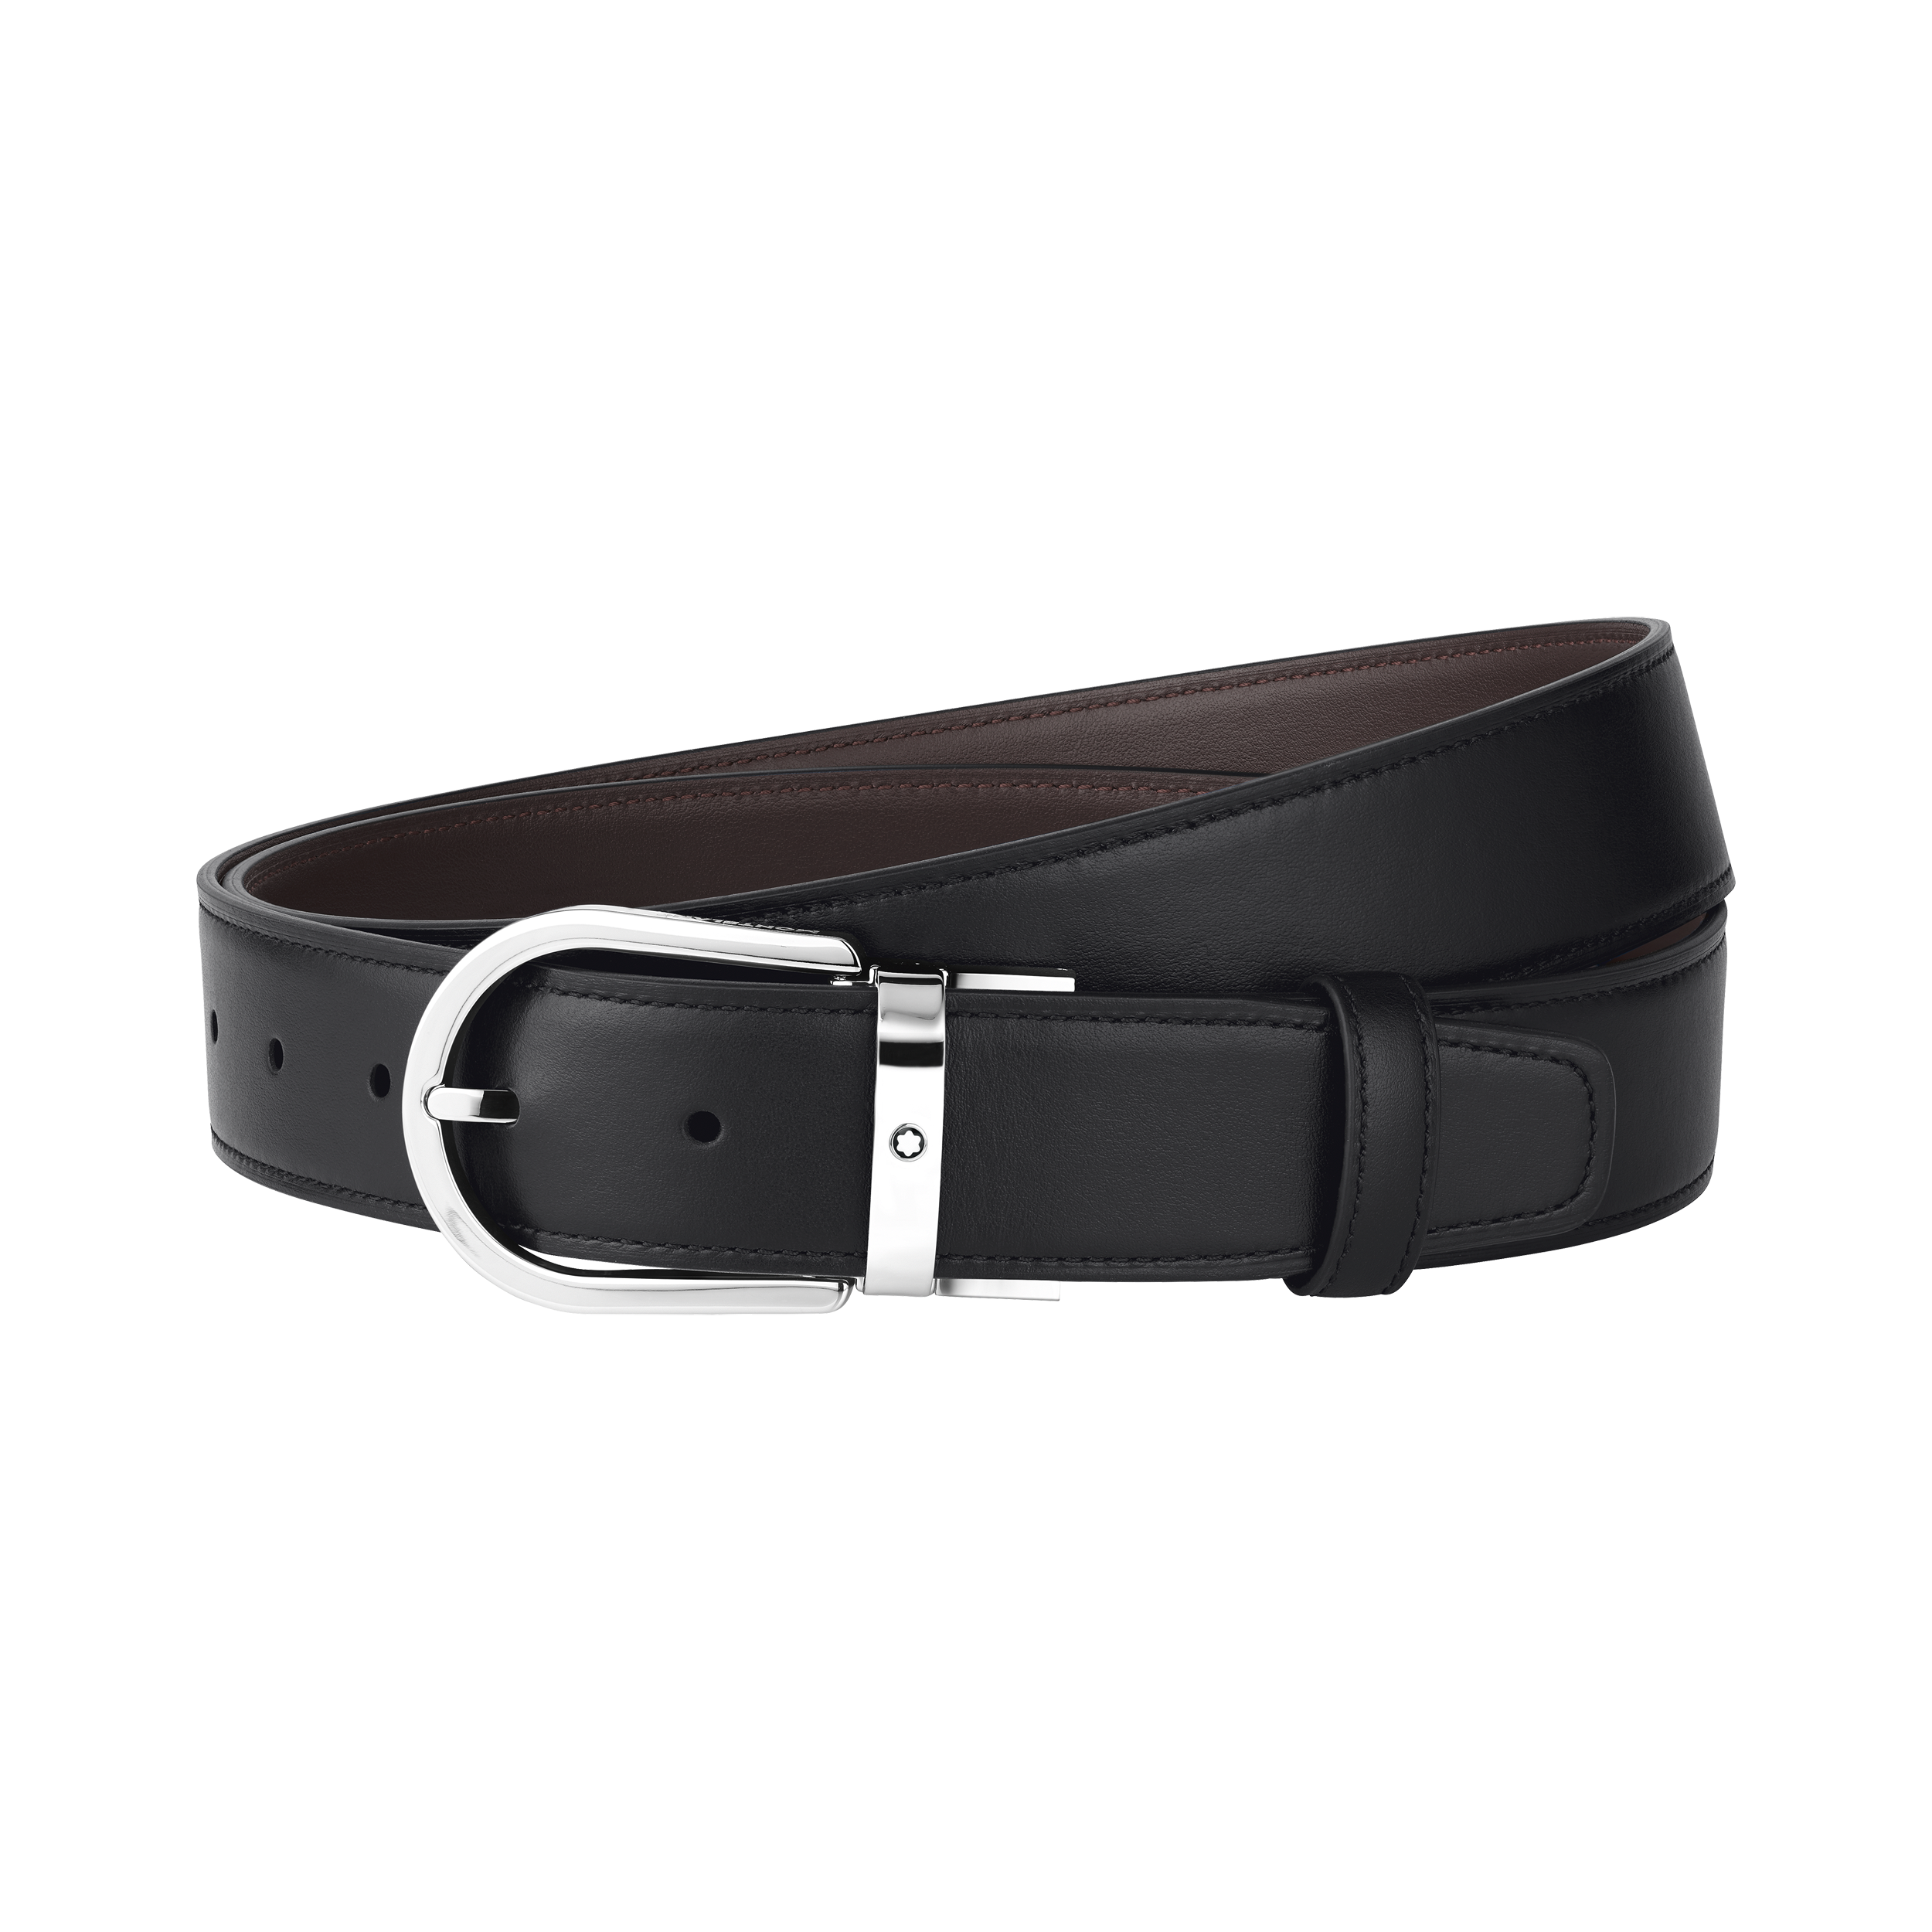 Horseshoe buckle black/tan 35 mm leather belt, image 1